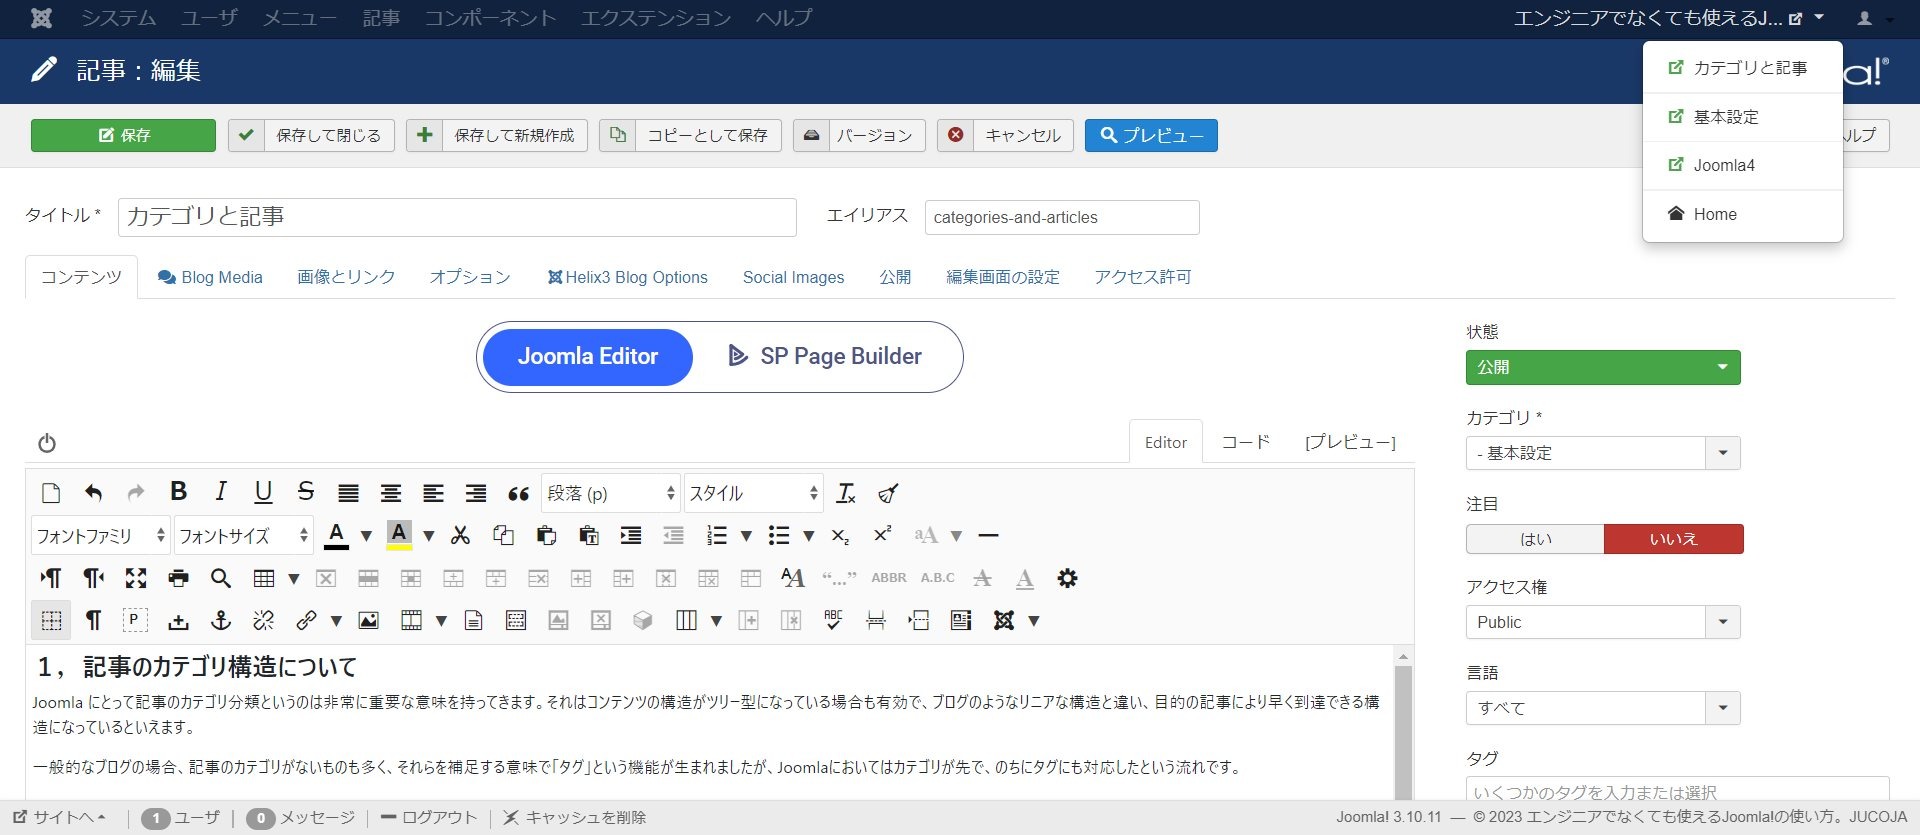 screenshot joomla.jp.net 2023.07.28 10 17 55